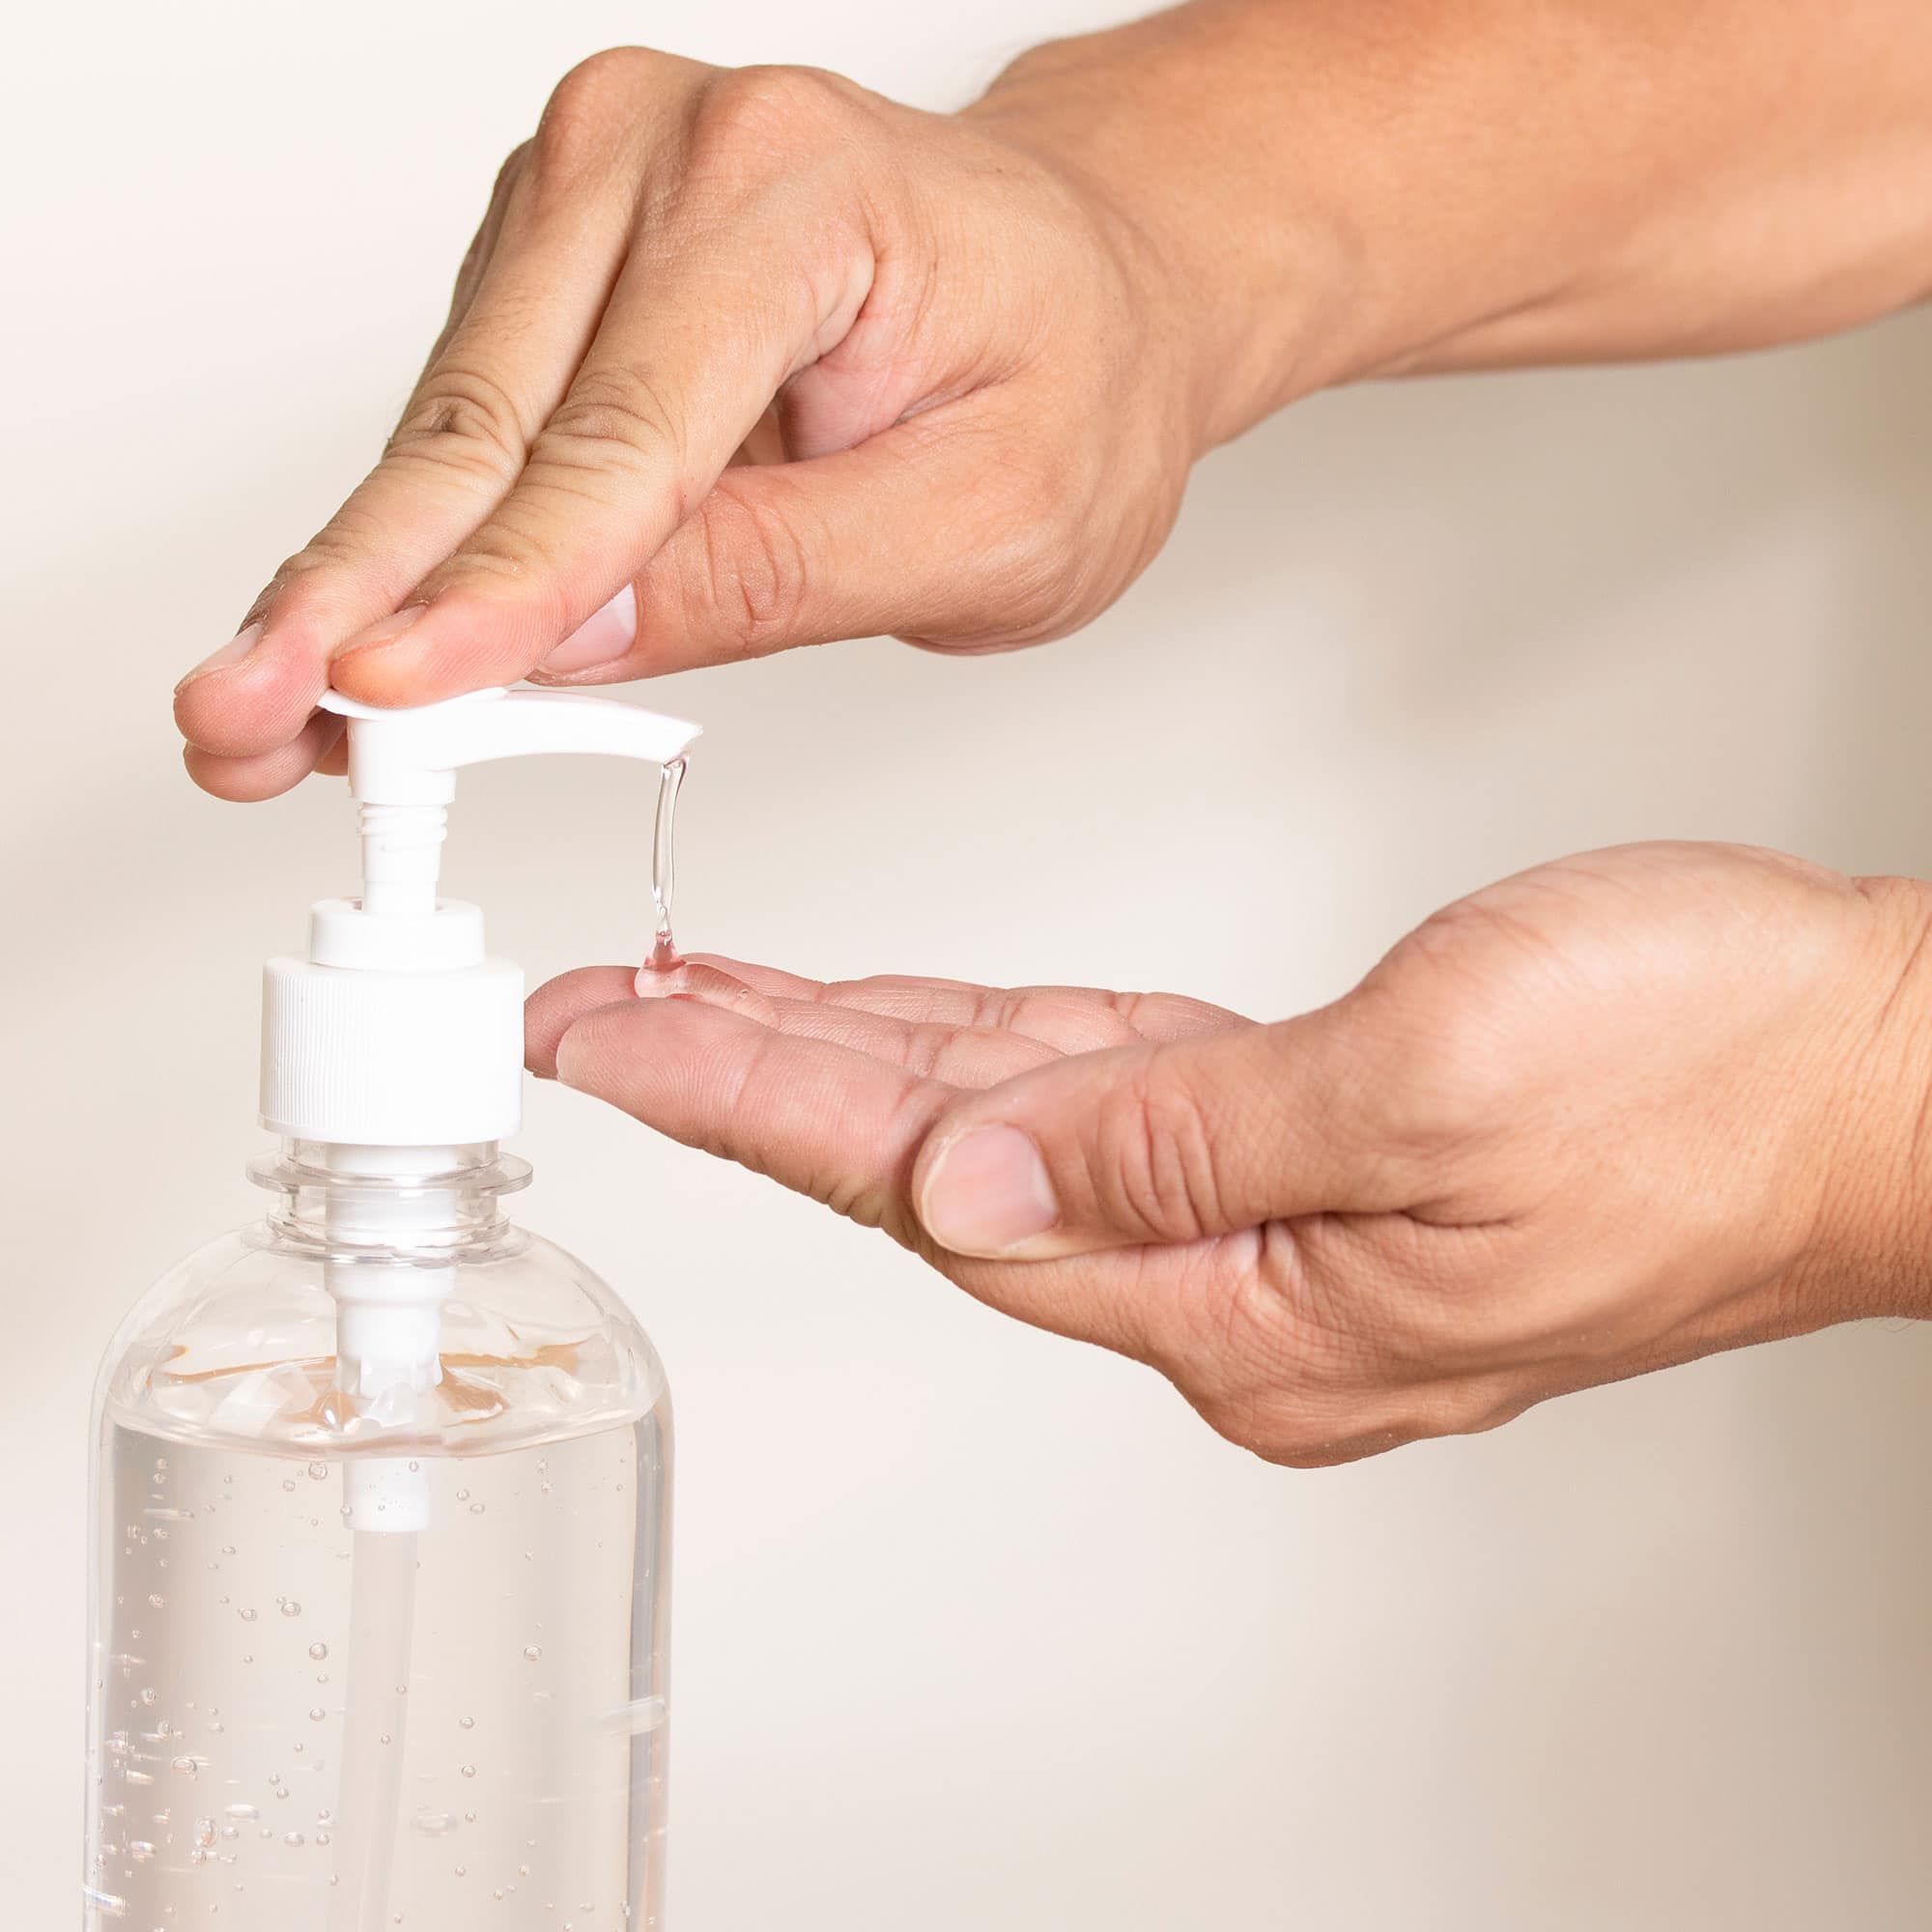 Hand Gel - Sanitex 60ml Antiseptic Hand gel